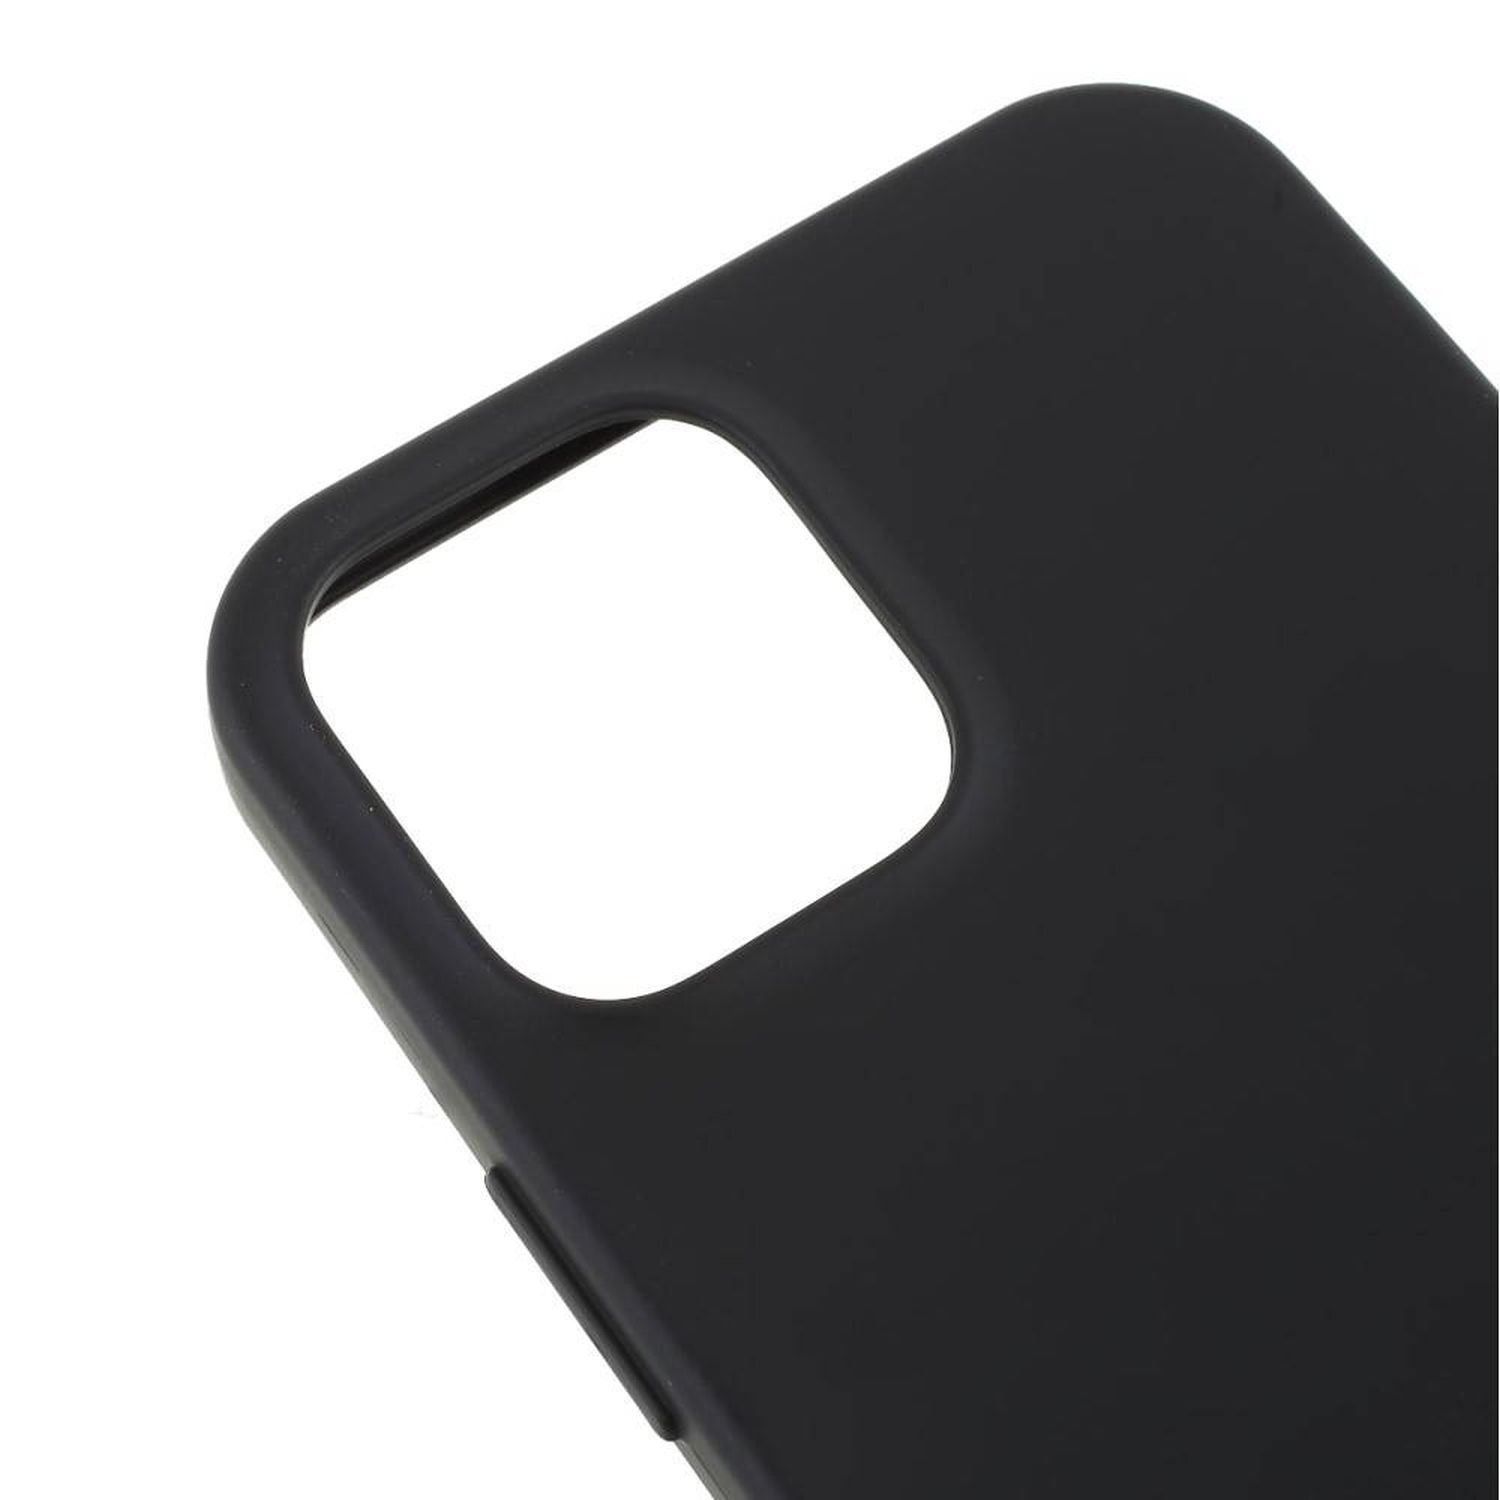 COFI cofi1453® Soft Case Jelly in Case mit Schutzhülle Bumper, iPhone 12, kompatibel Handyhülle 12 Bumper Schwarz Apple, Schwarz, iPhone